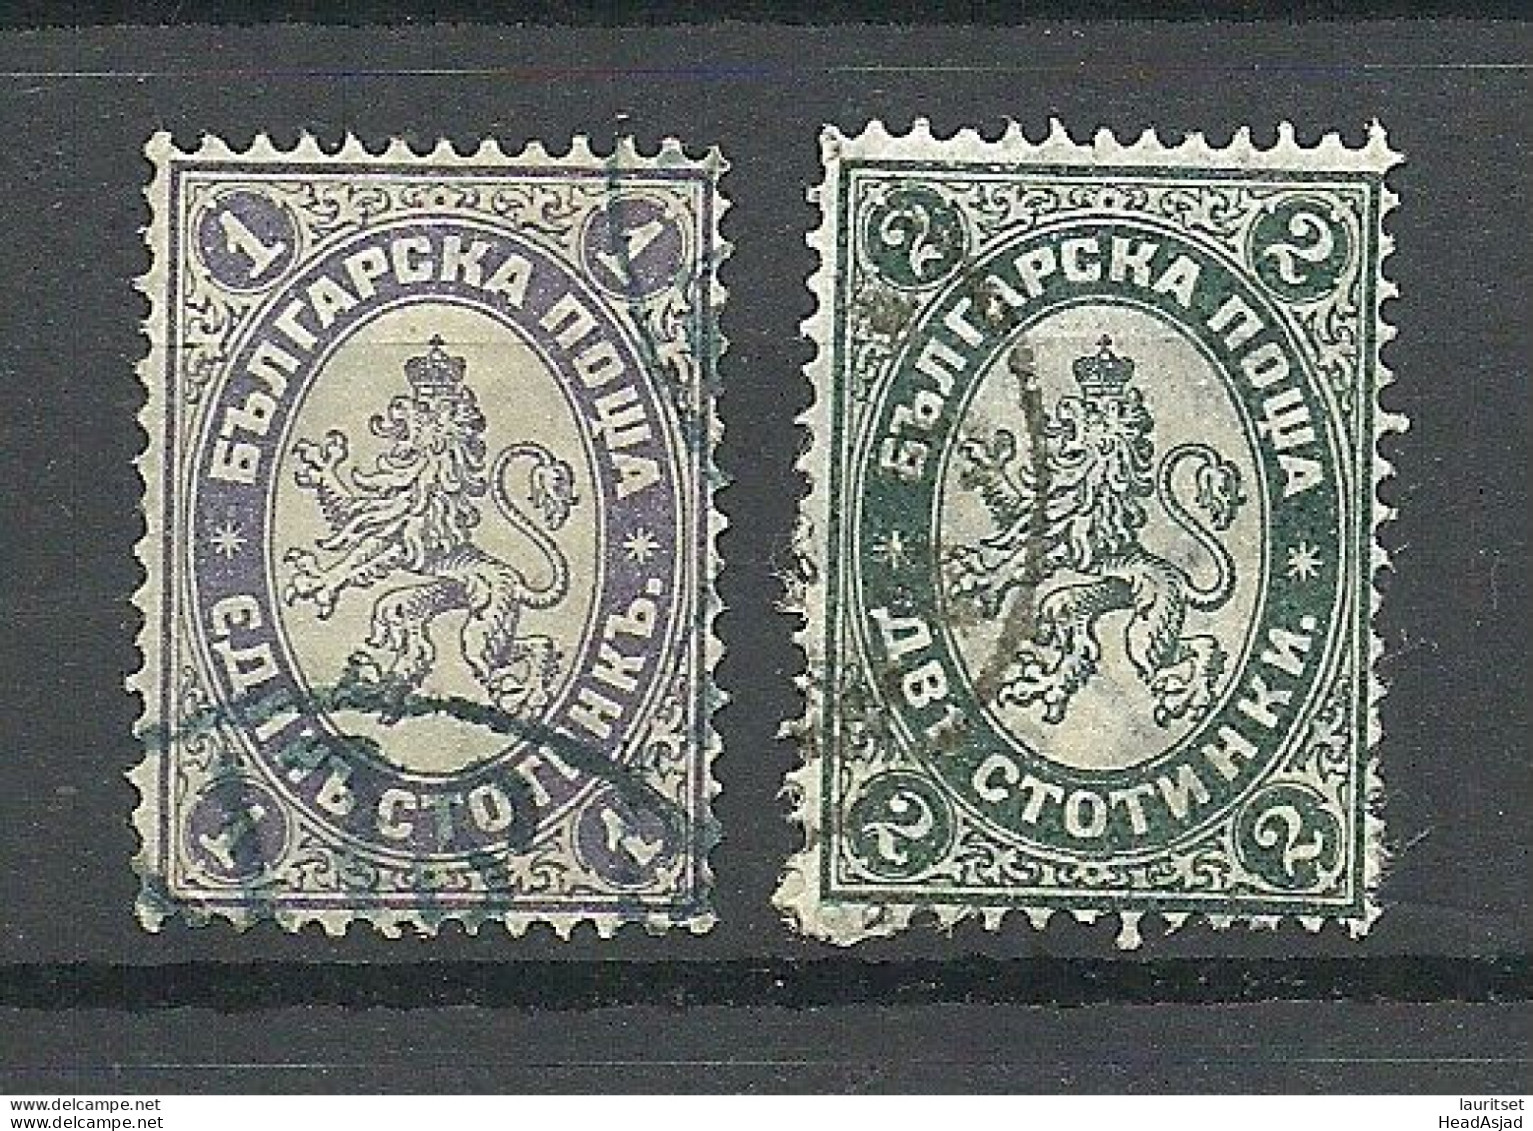 BULGARIA Bulgarien 1882 & 1886 Michel 12 & 26 O - Gebraucht